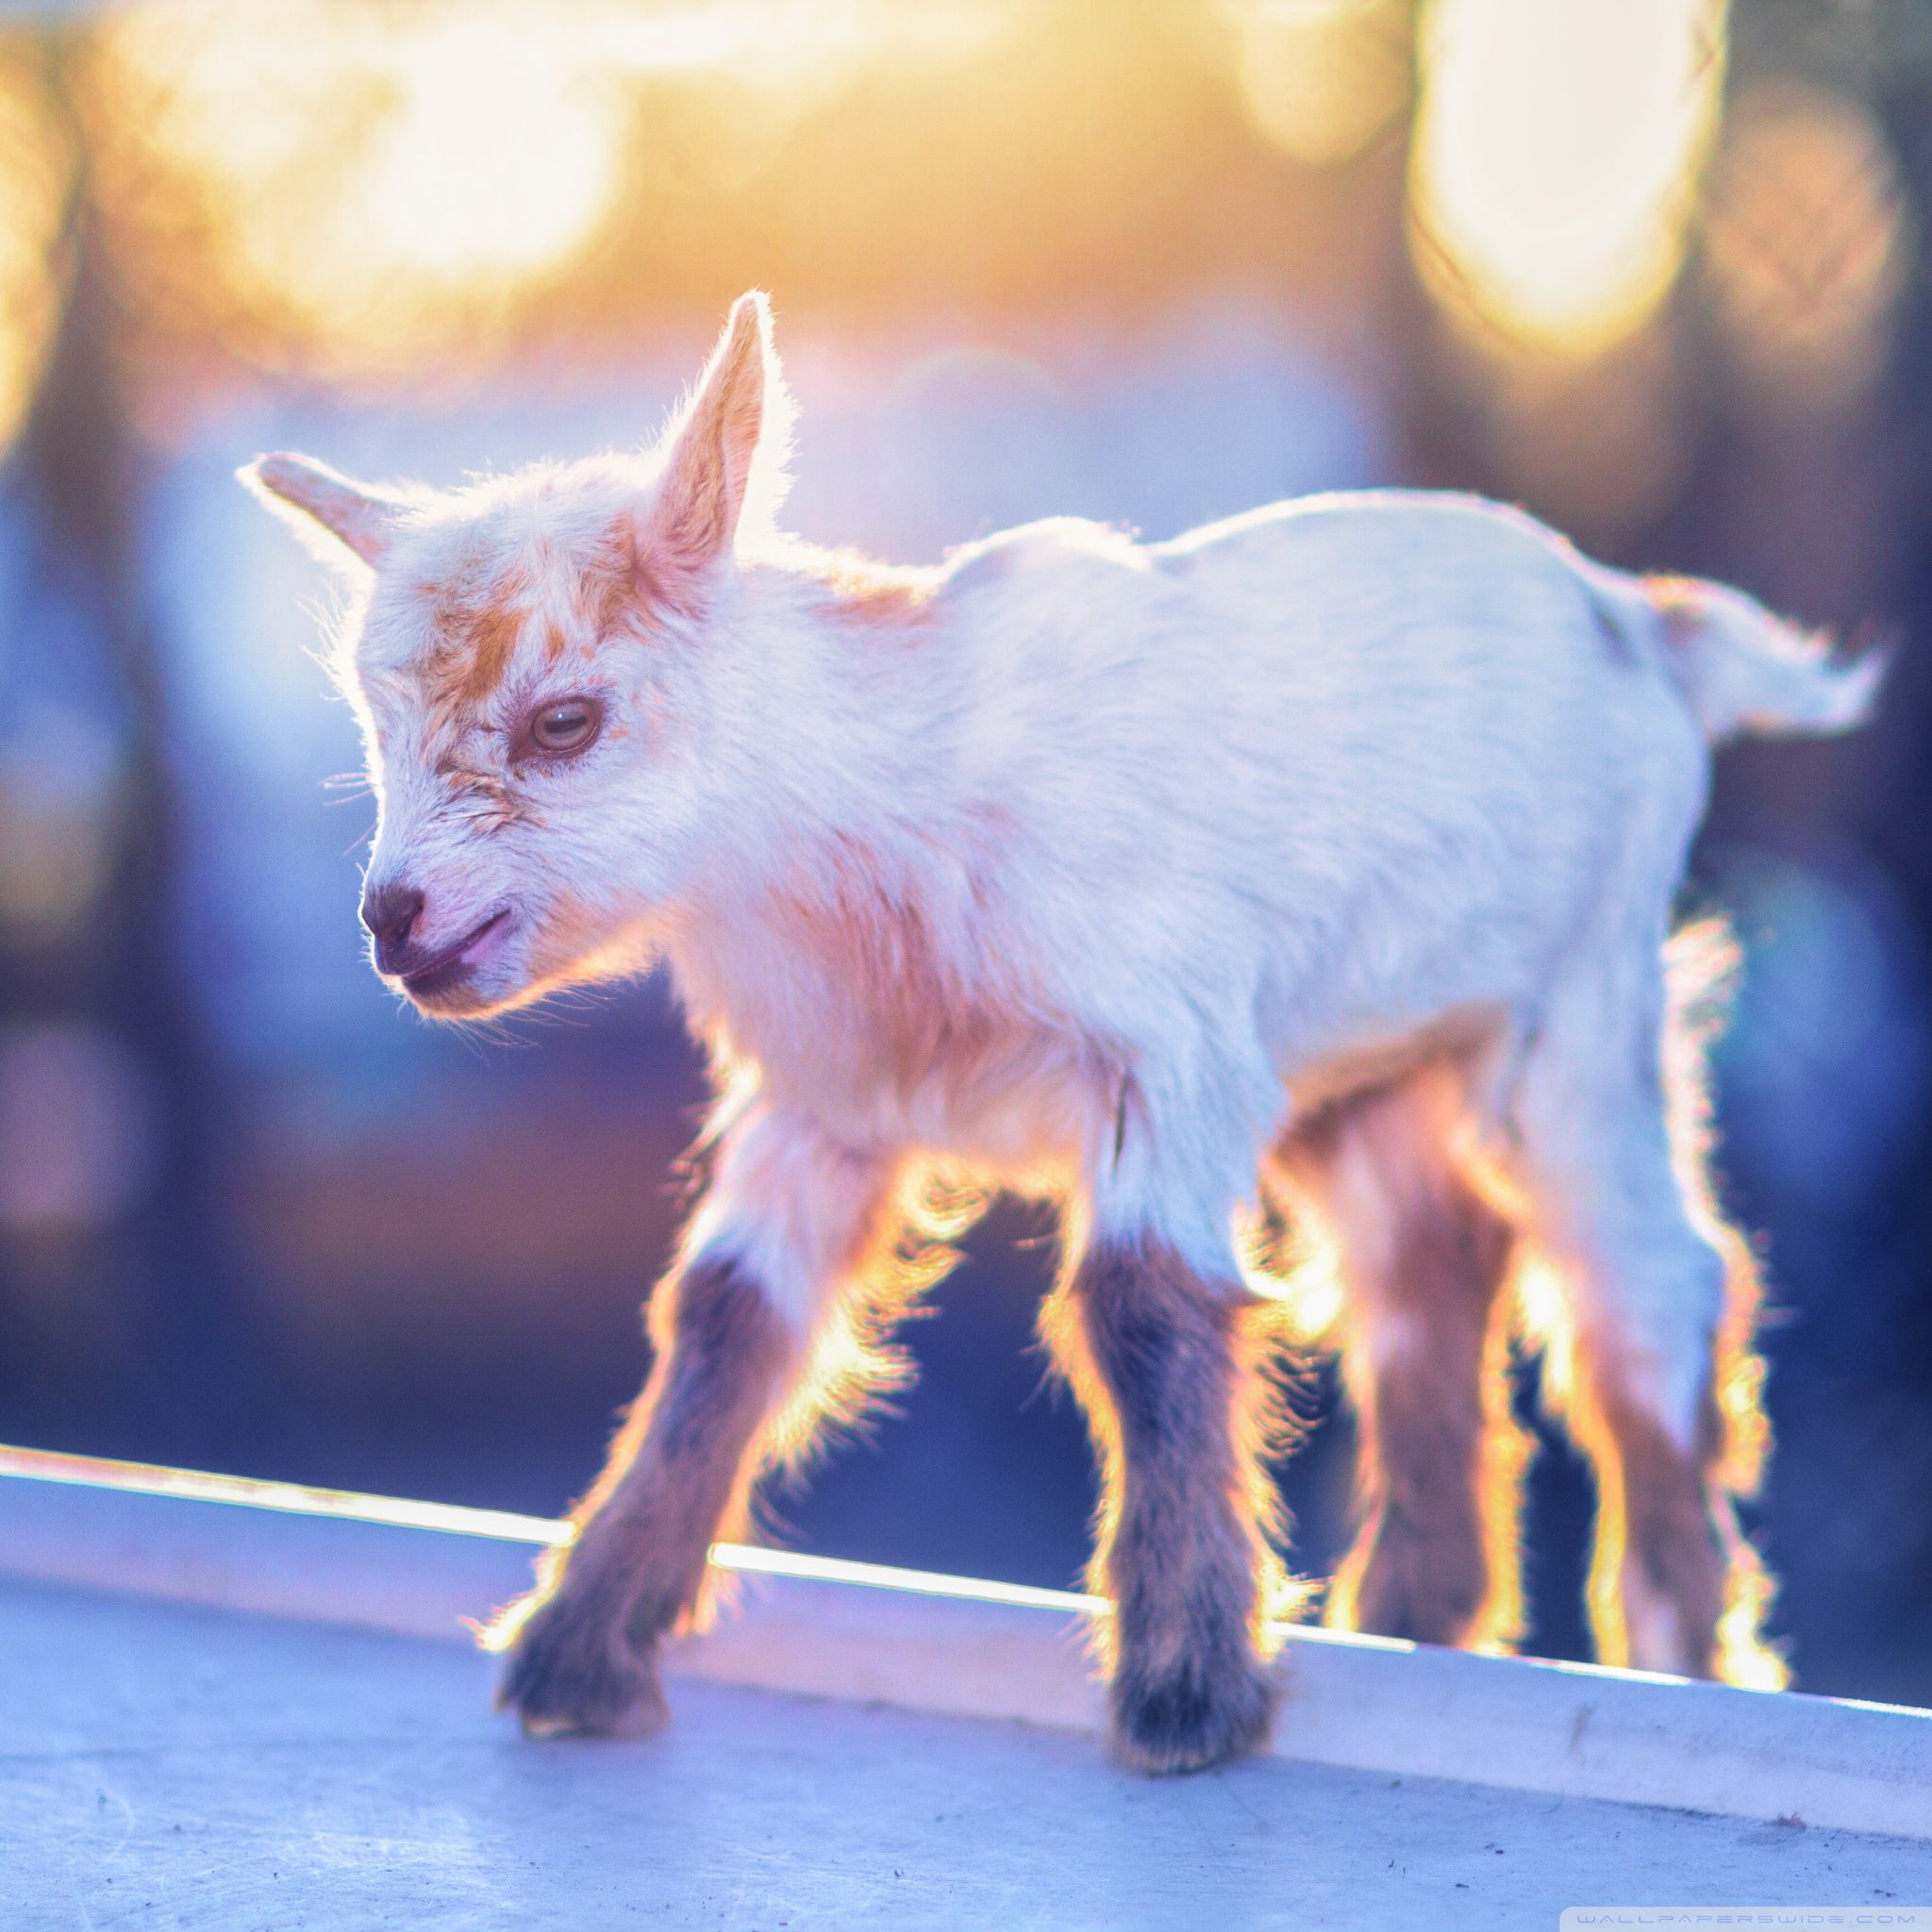 Baby Goat Wallpaper